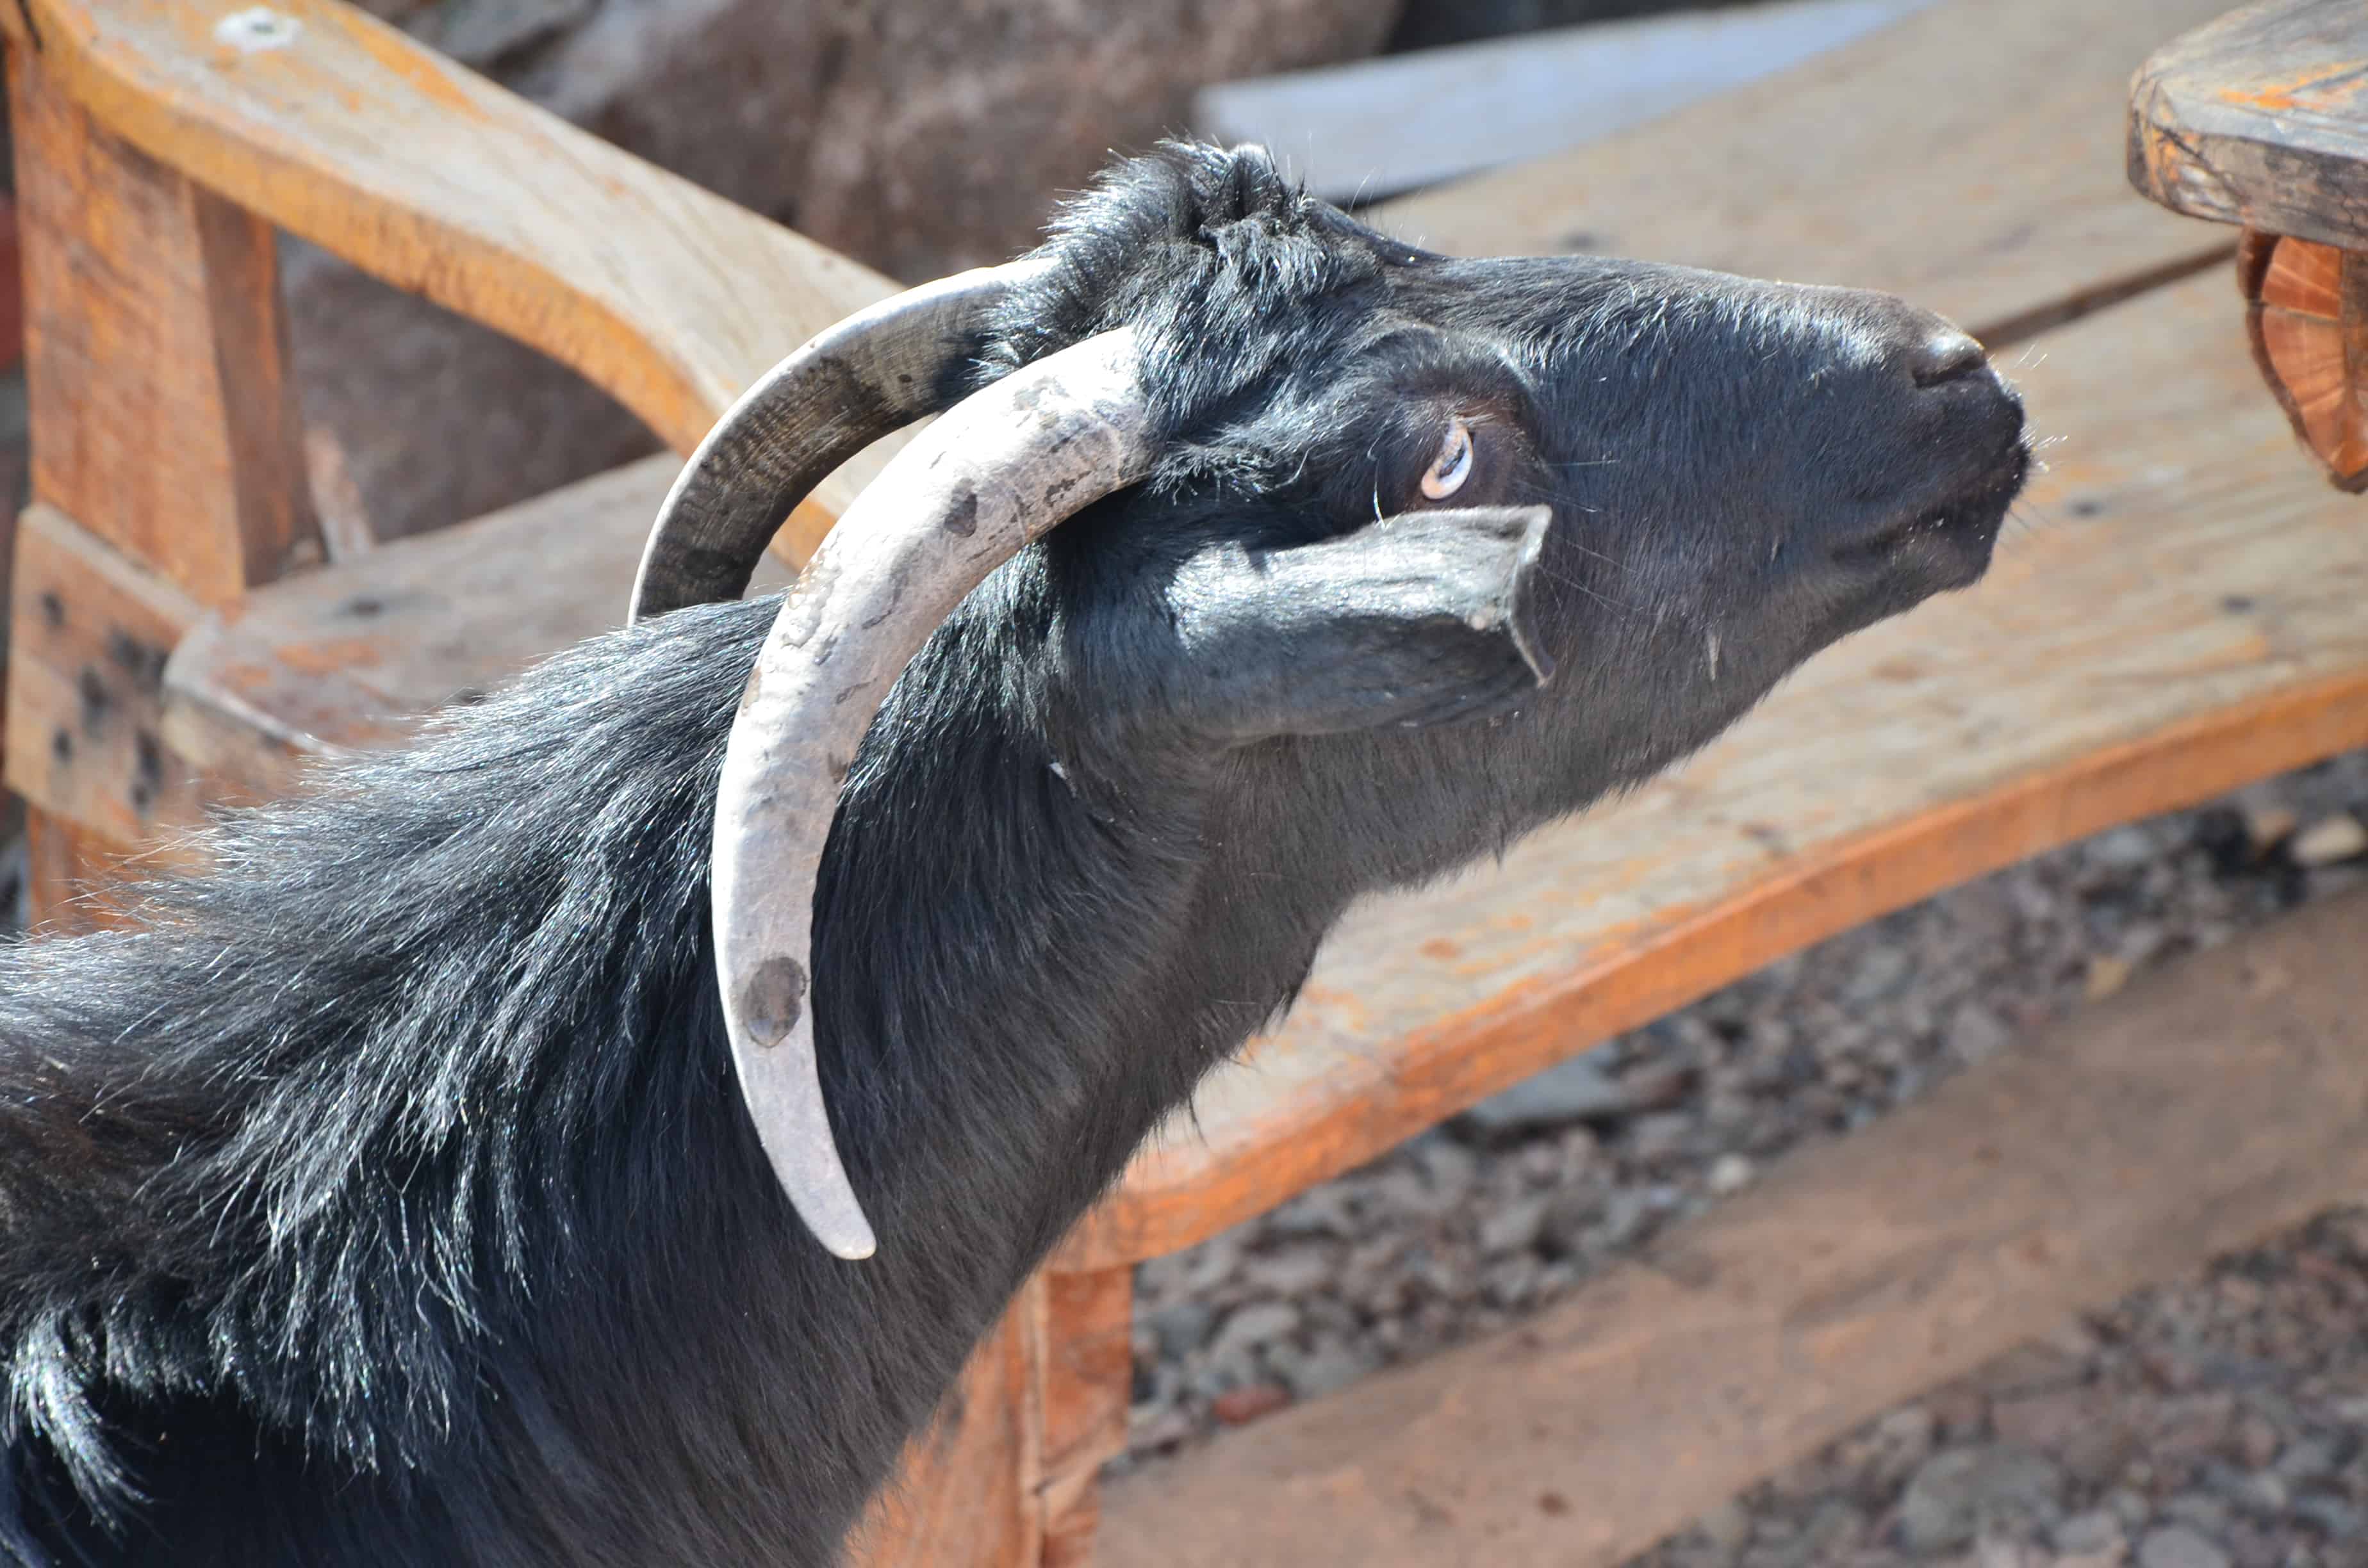 Outpost goat in Sinai, Egypt